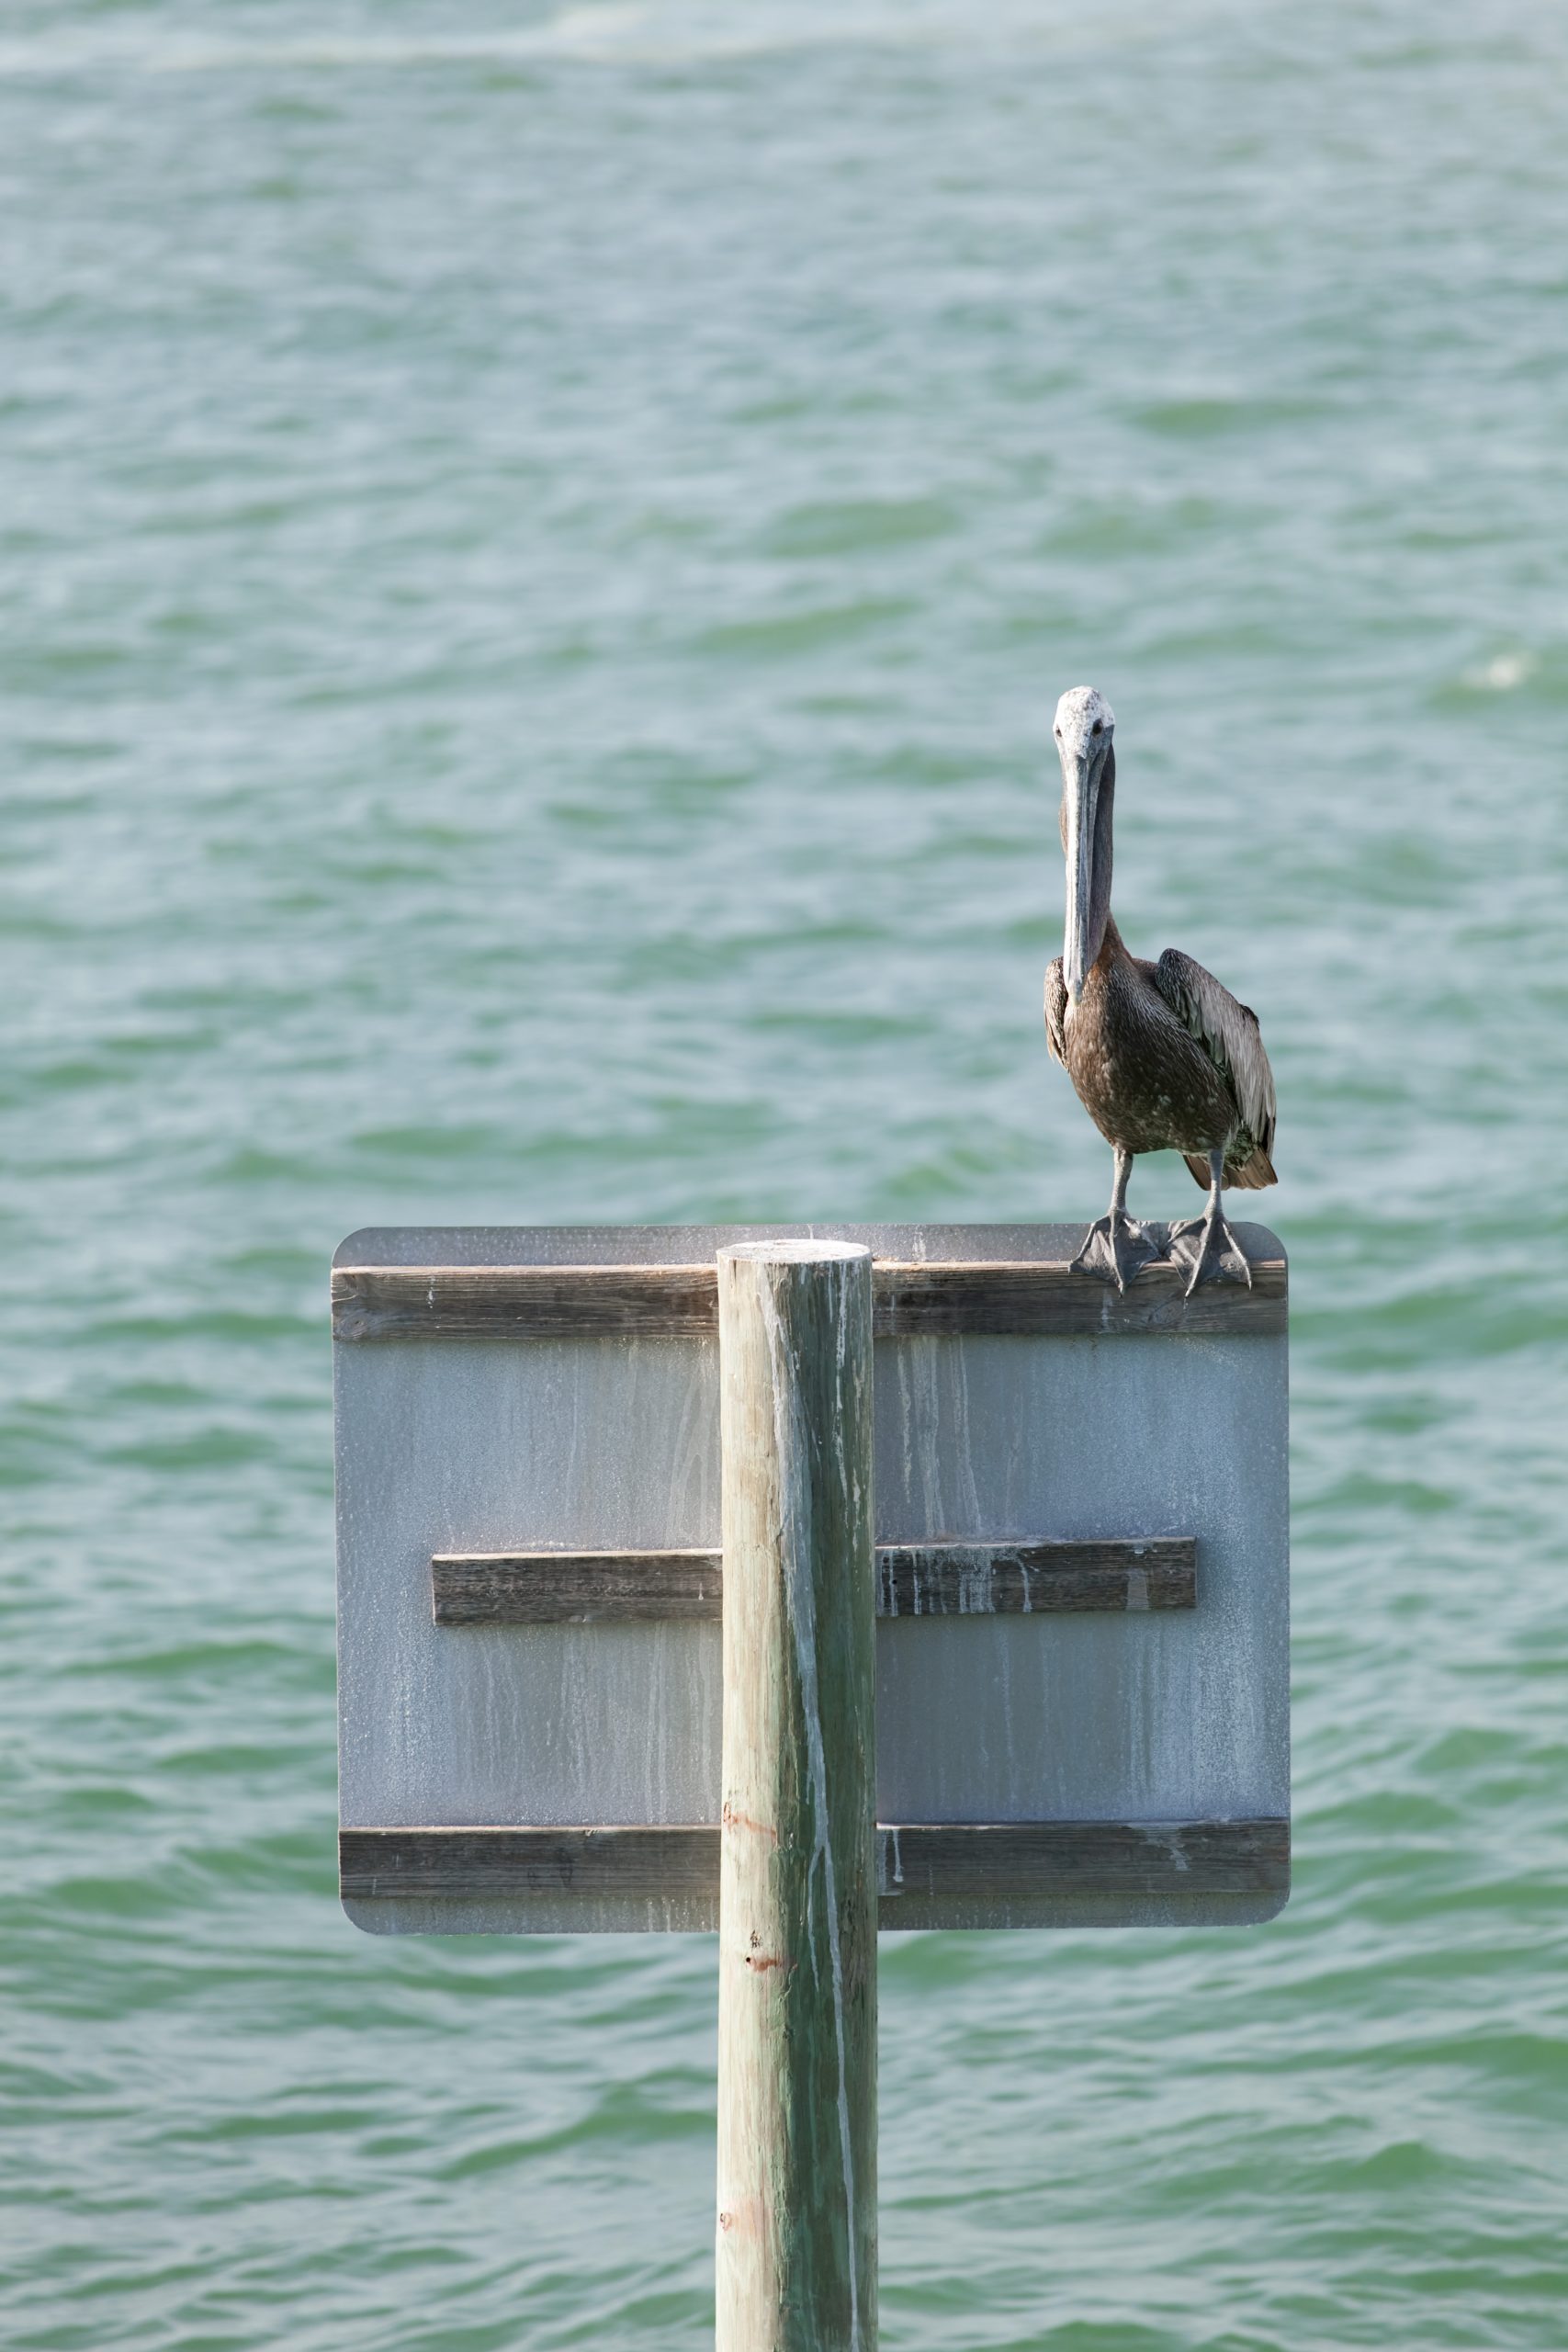 a brown pelican bird posing near the public pier in clearwater florida BKxaQB0So scaled